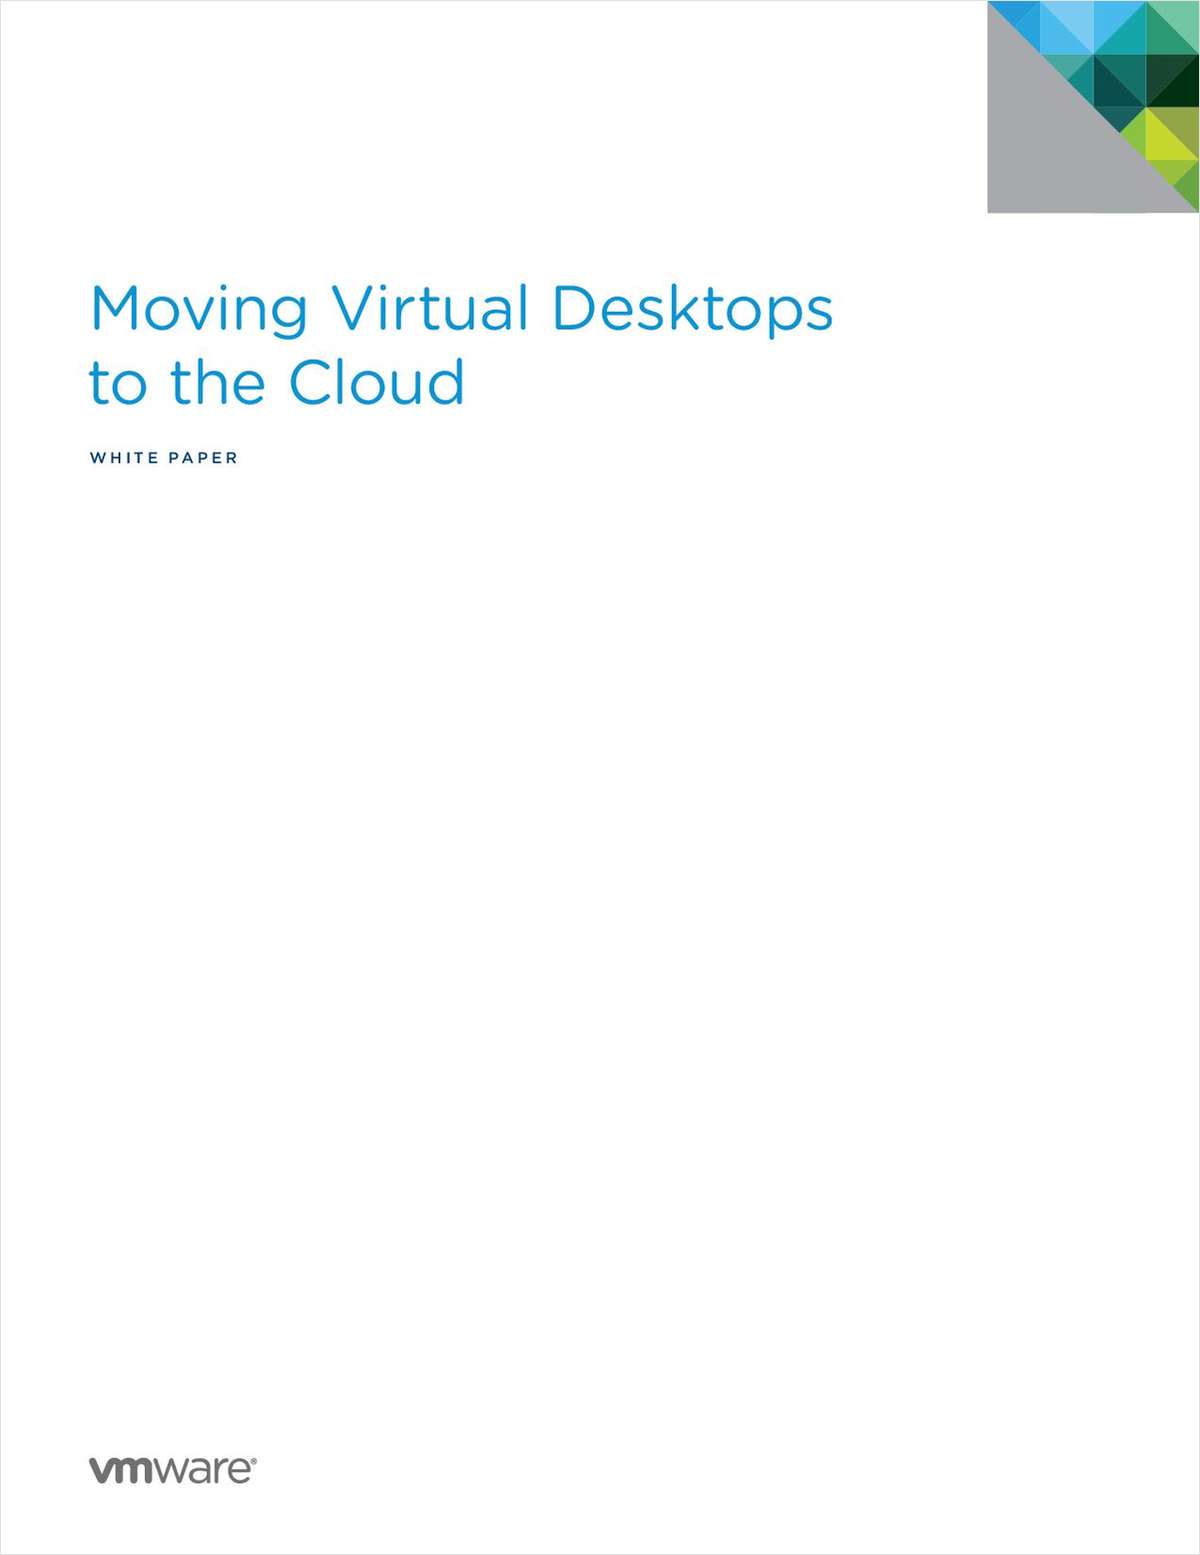 VDI cloud migration strategies